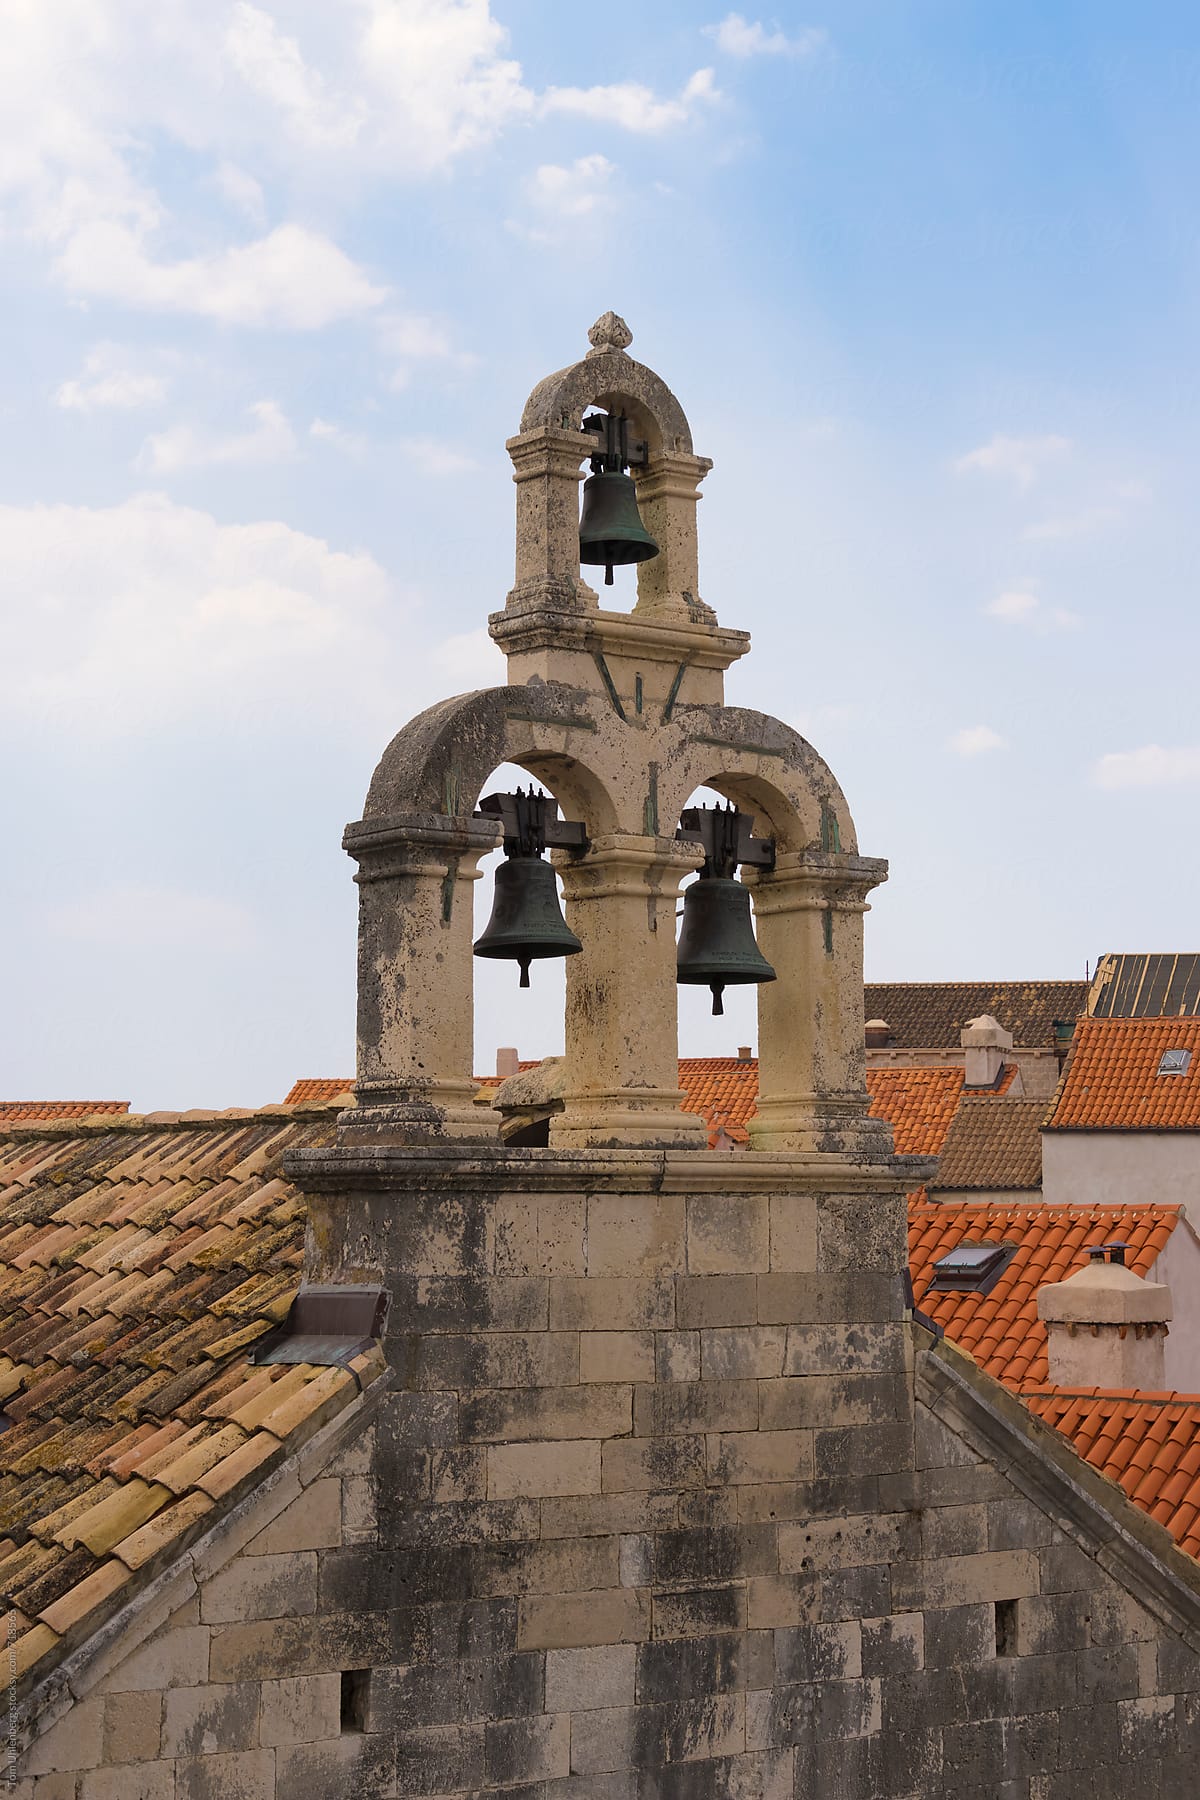 Bells in the Old Town of Dubrovnik, Croatia